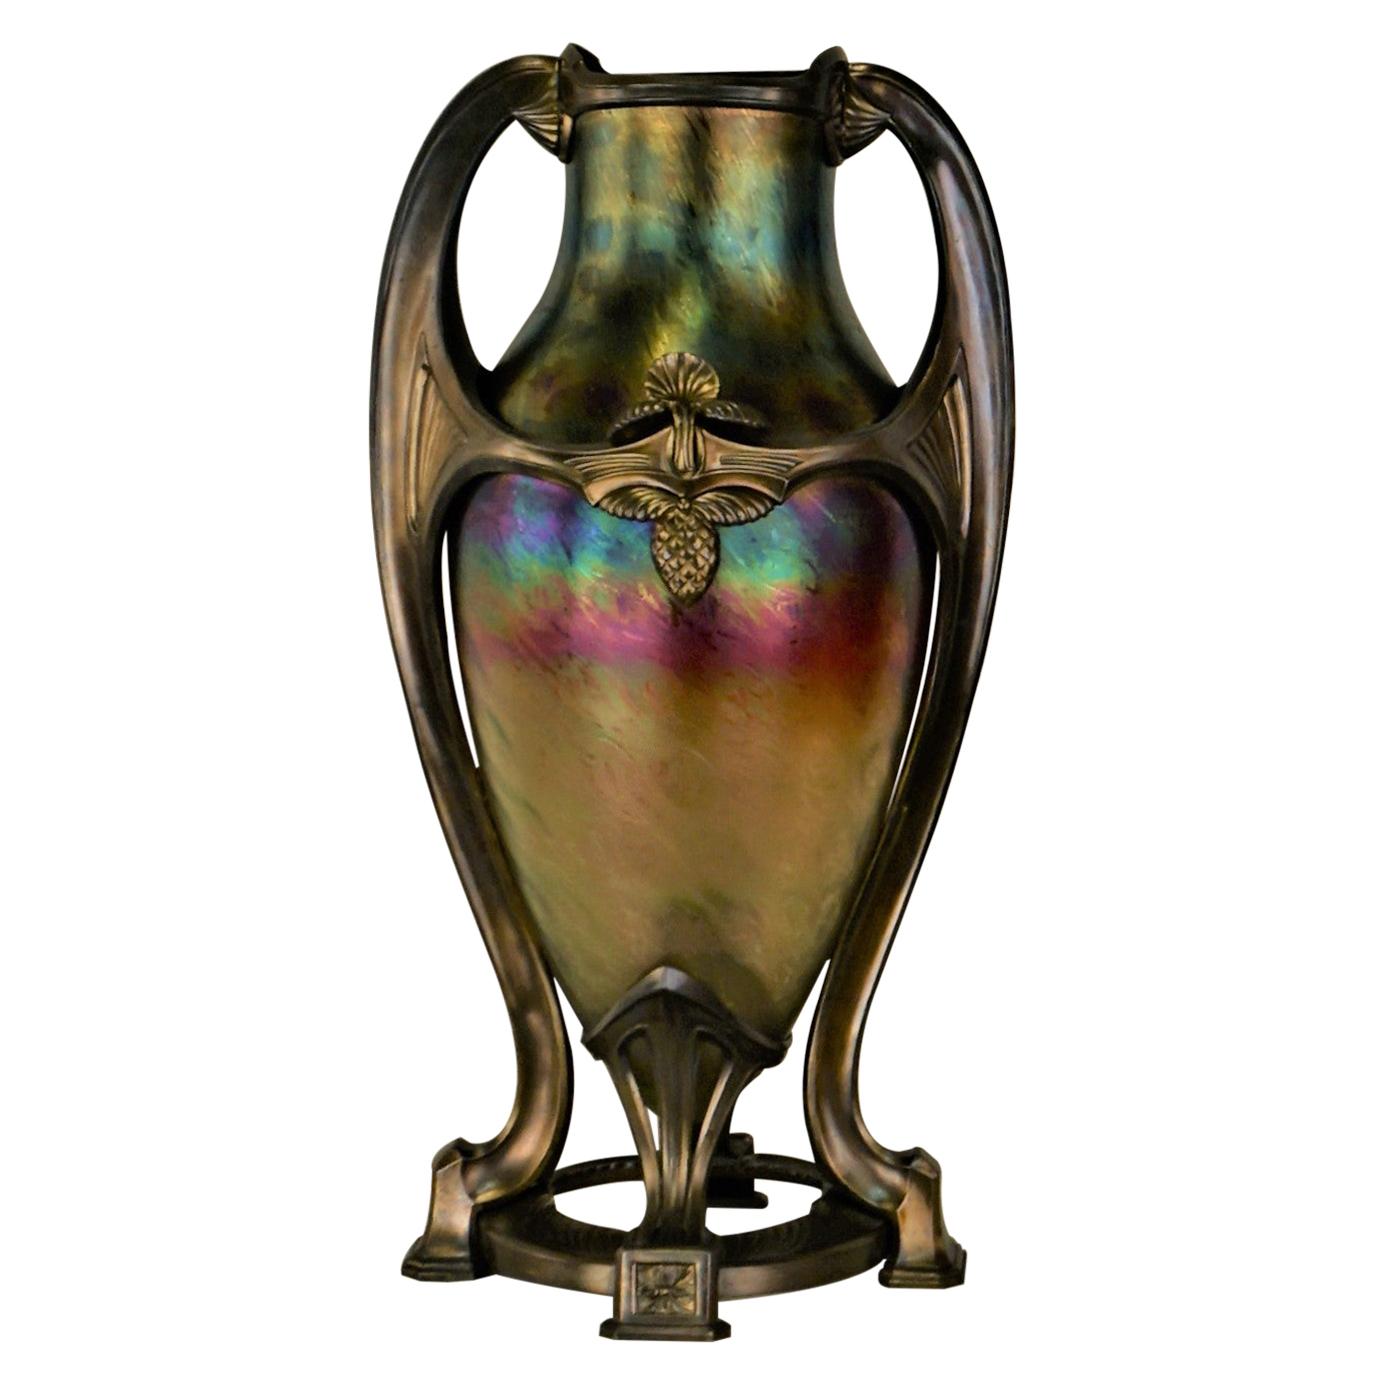 Art Nouveau/Art Deco Large Glass Vase with Patinated Bronze Finished Base